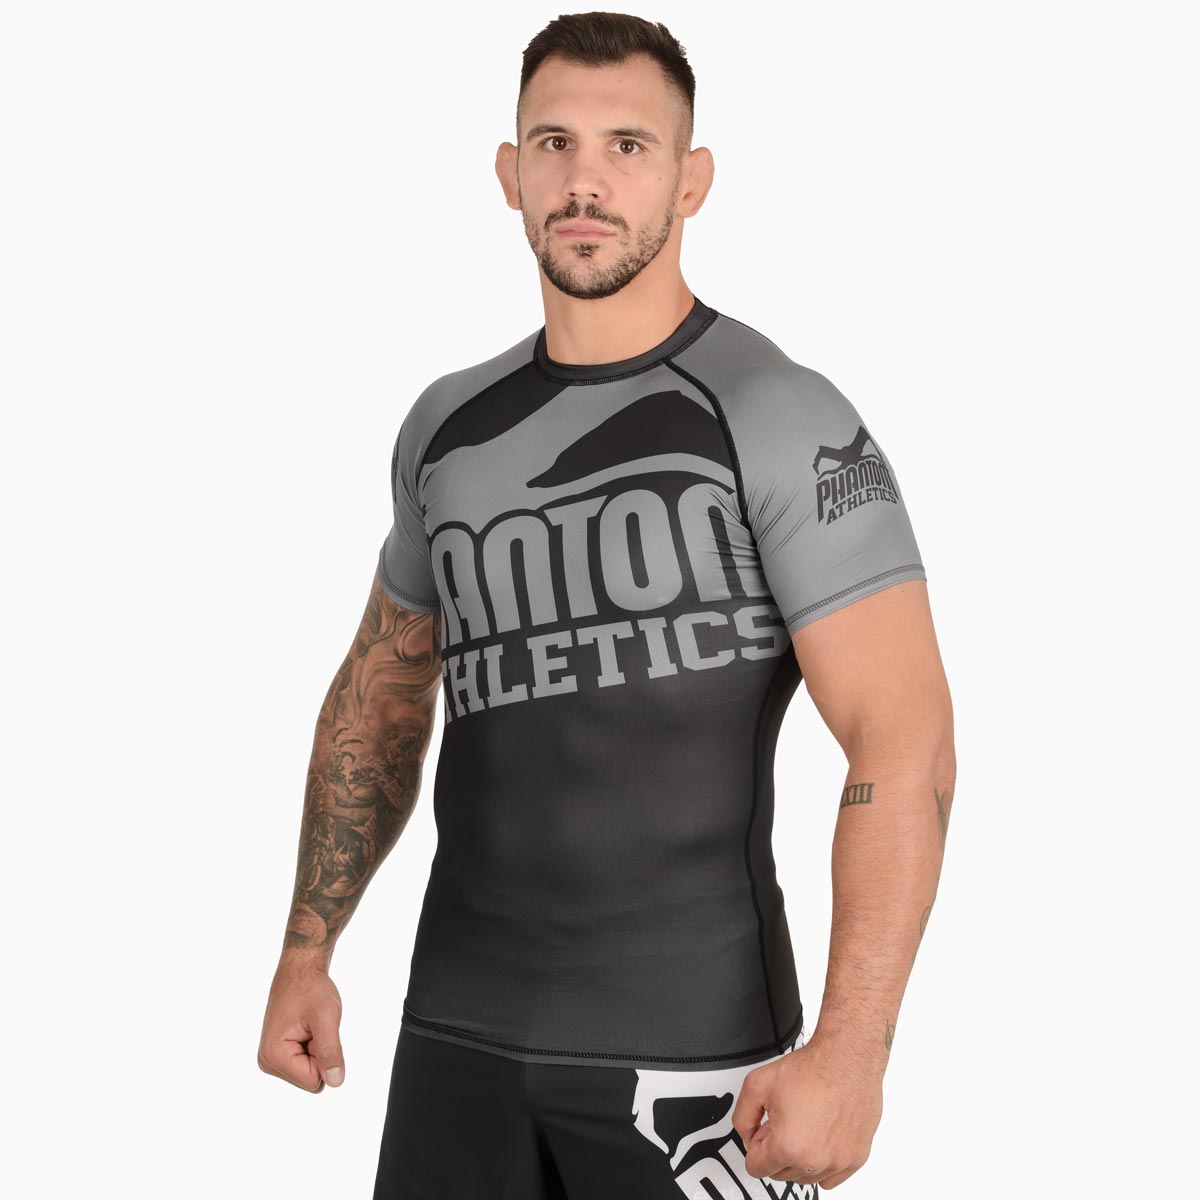 Sanabul Essentials Long Sleeve Compression Shirts for Men - MMA BJJ  Athletic Compression Shirt - Men Cross Training Rashguard